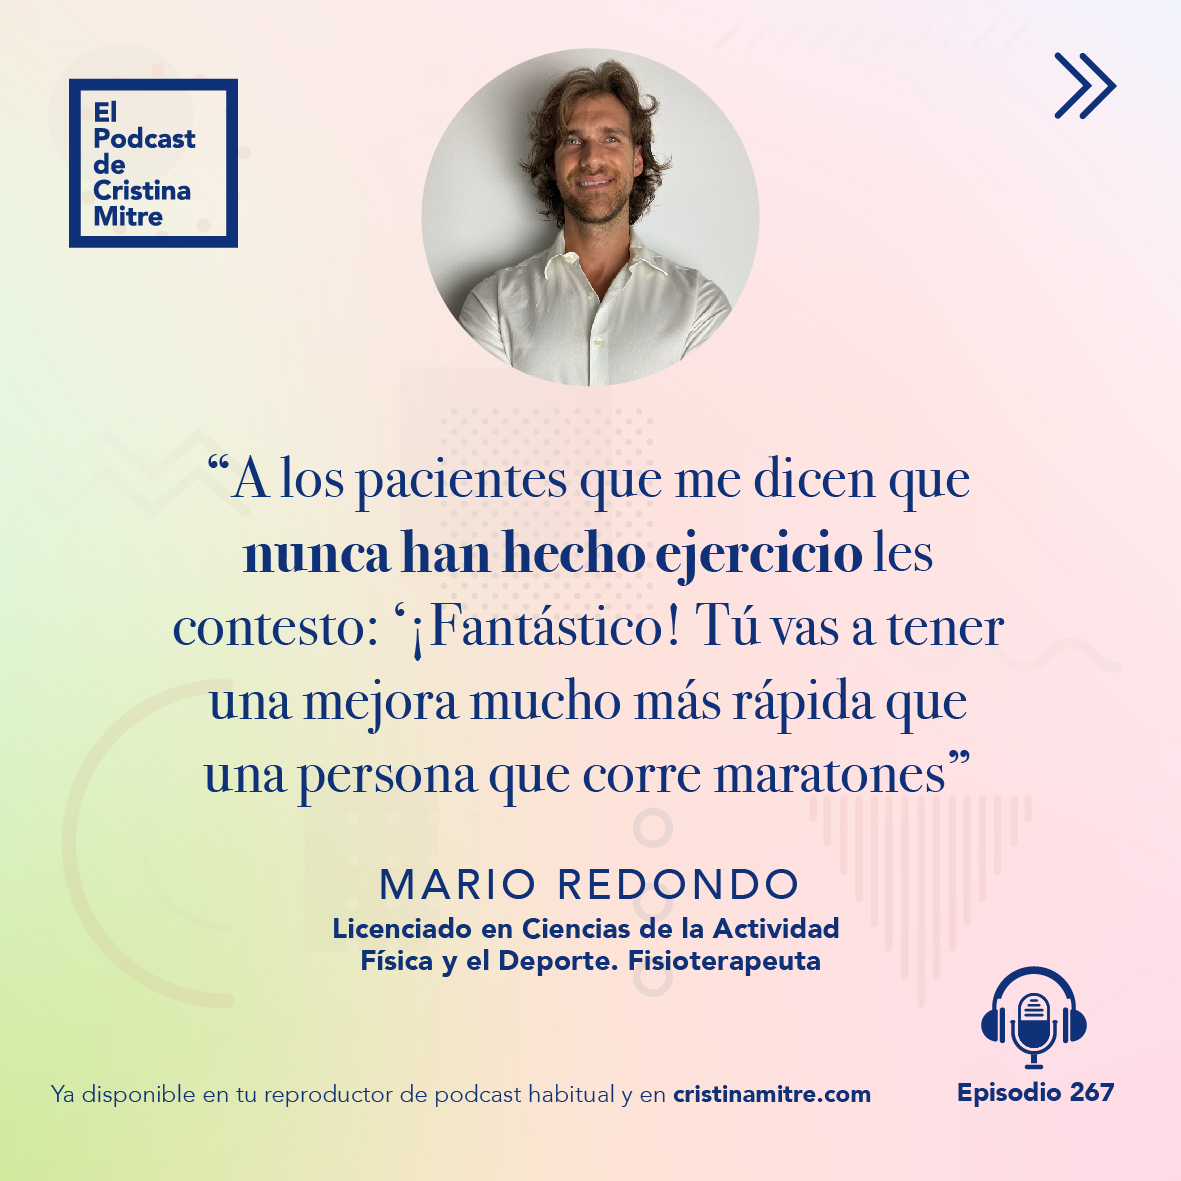 El podcast de Cristina Mitre Mario Redondo Huesos sanos